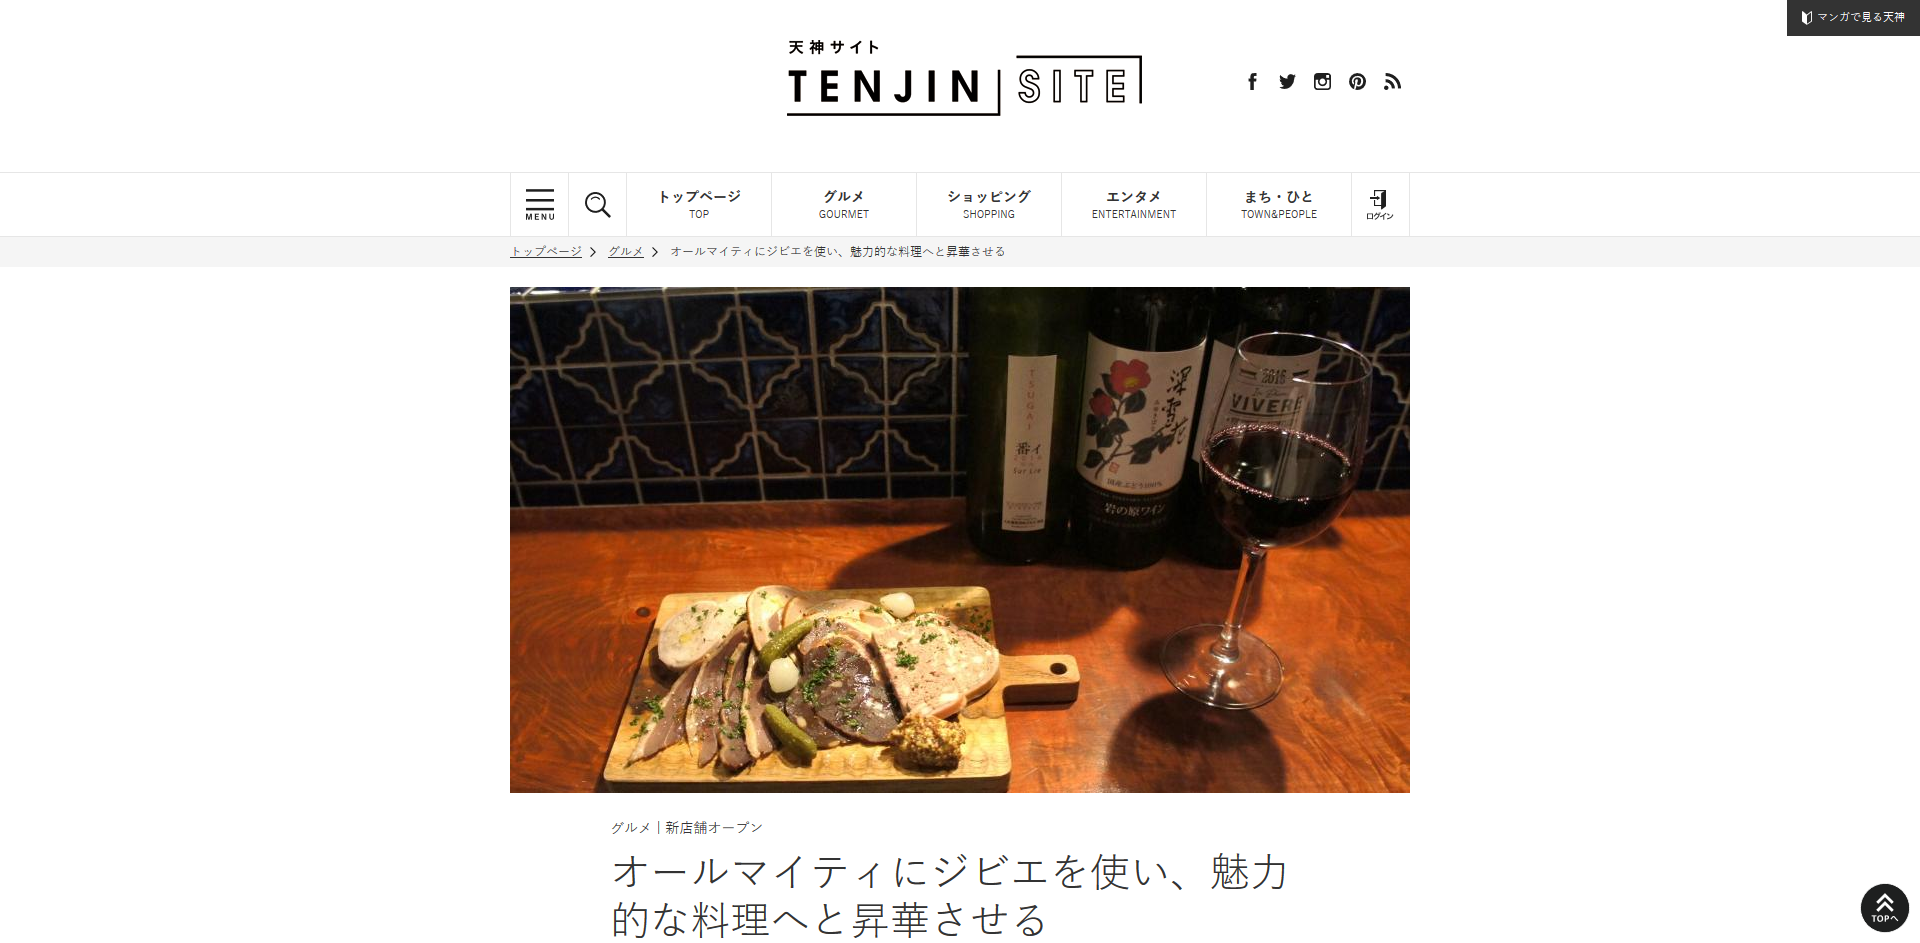 【Nico Appartement】Webサイト“TENJIN SITE”に紹介されました。